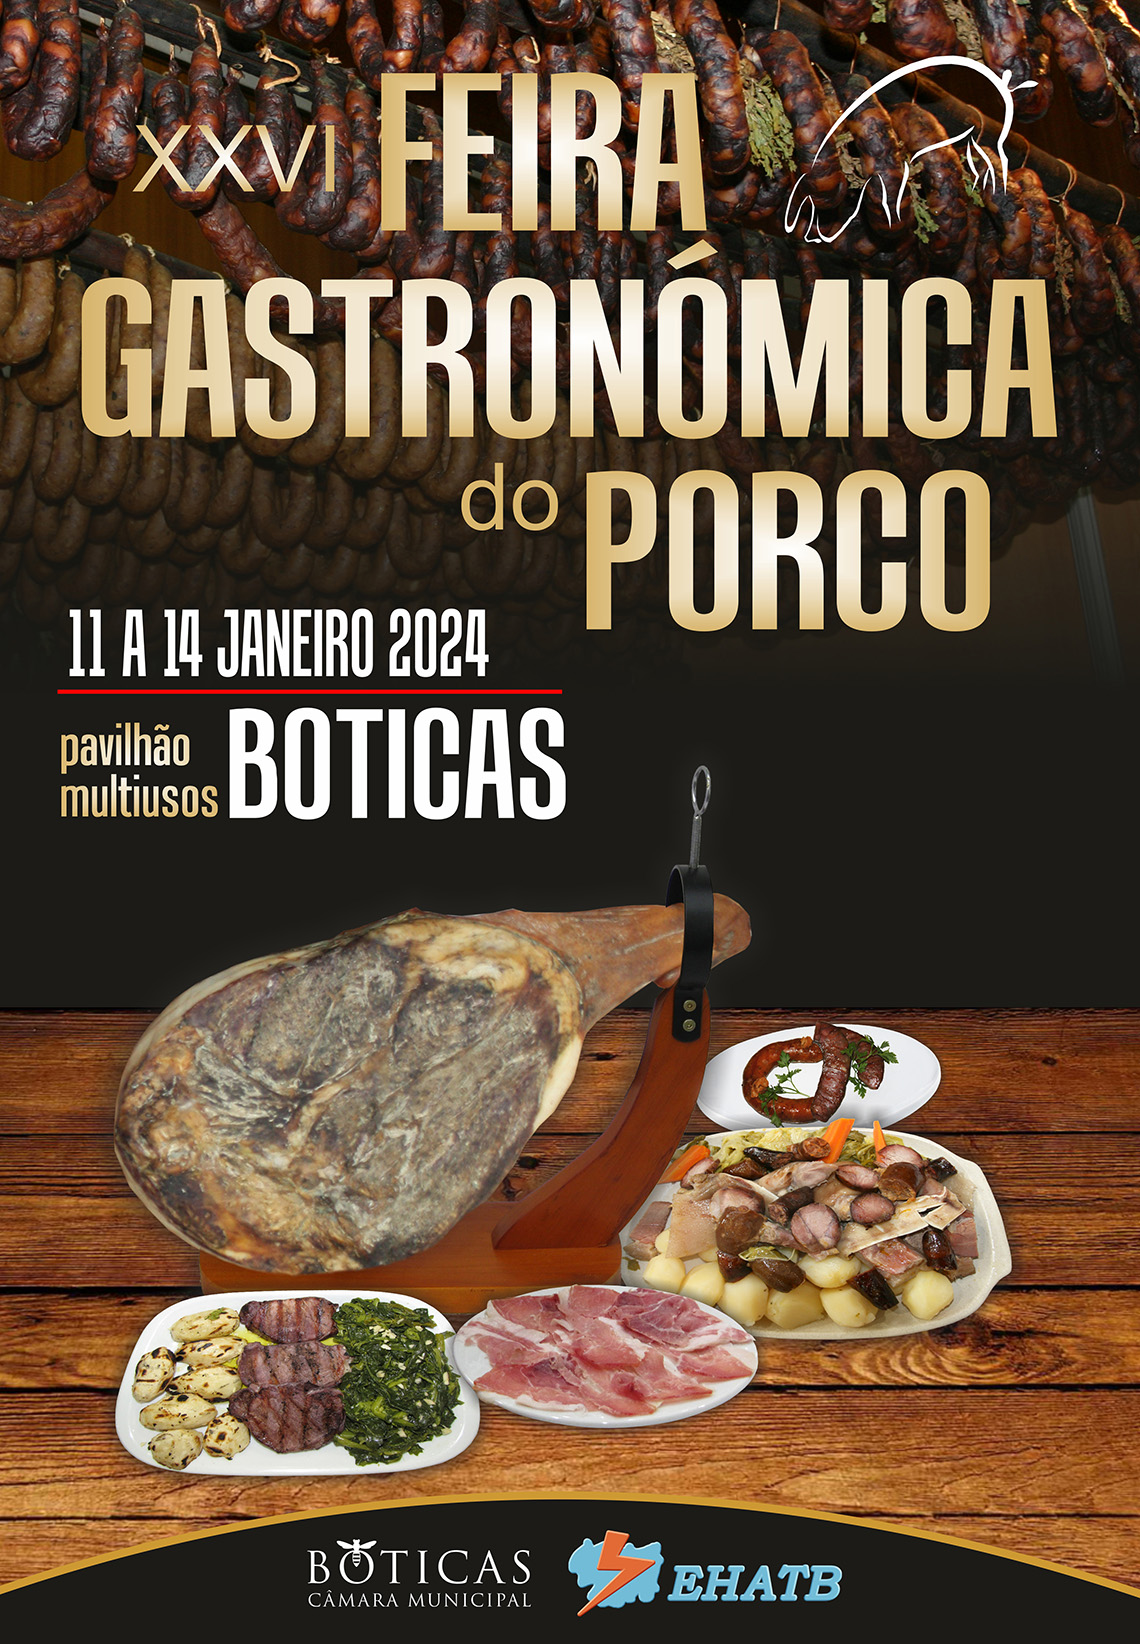 XXVI Feira Gastronmica do Porco realiza-se de 11 a 14 de janeiro 2024